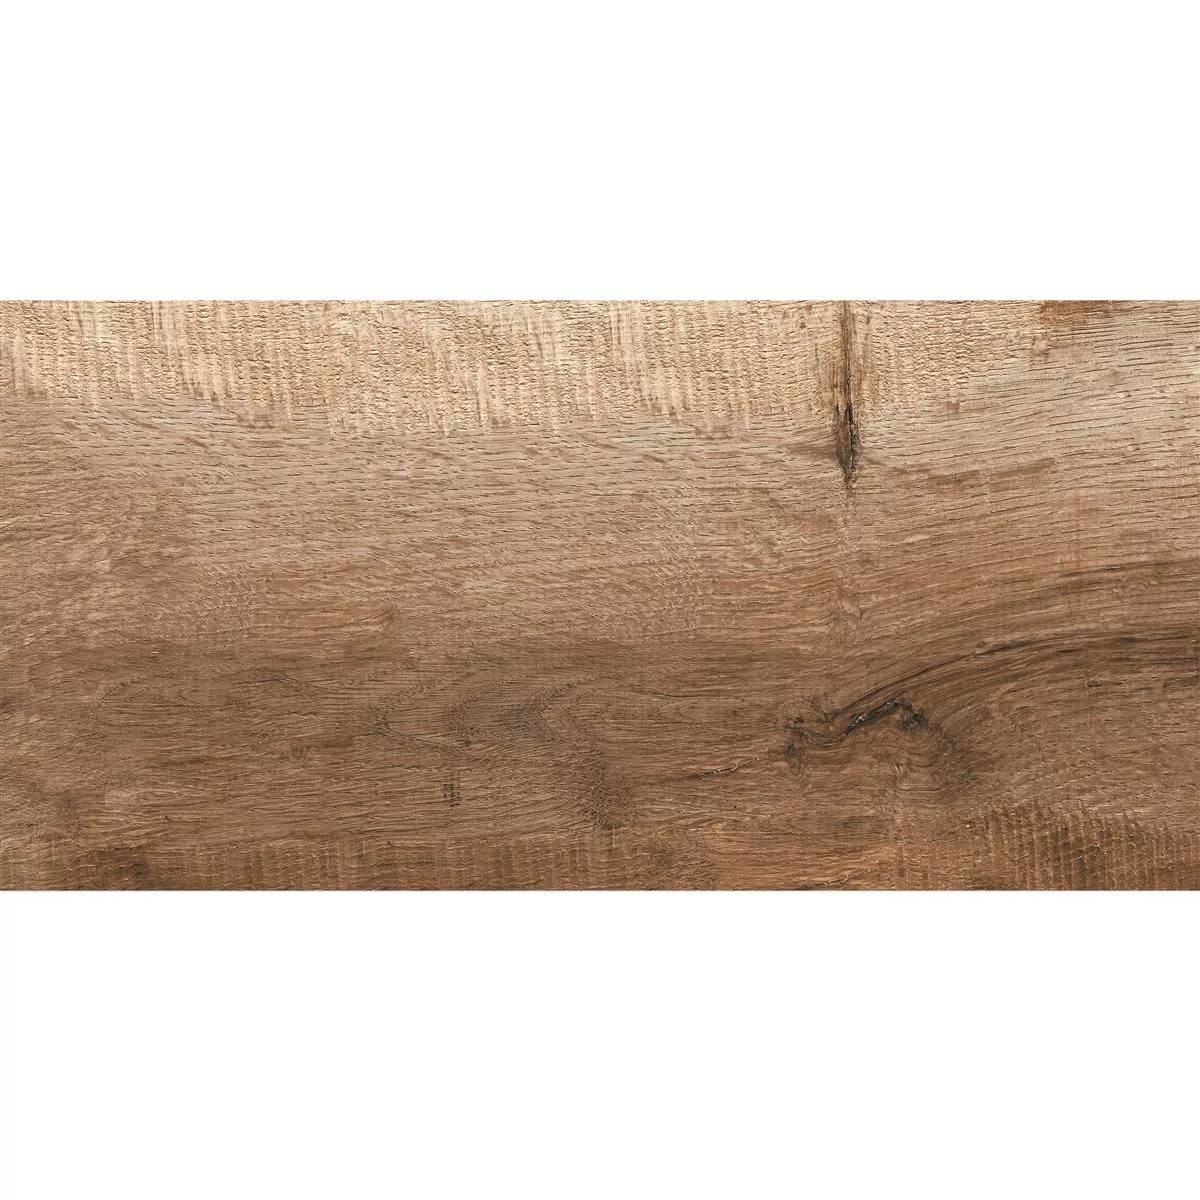 Próbka Płytki Podłogowe Goranboy Wygląd Drewna Natural 30x60cm / R10